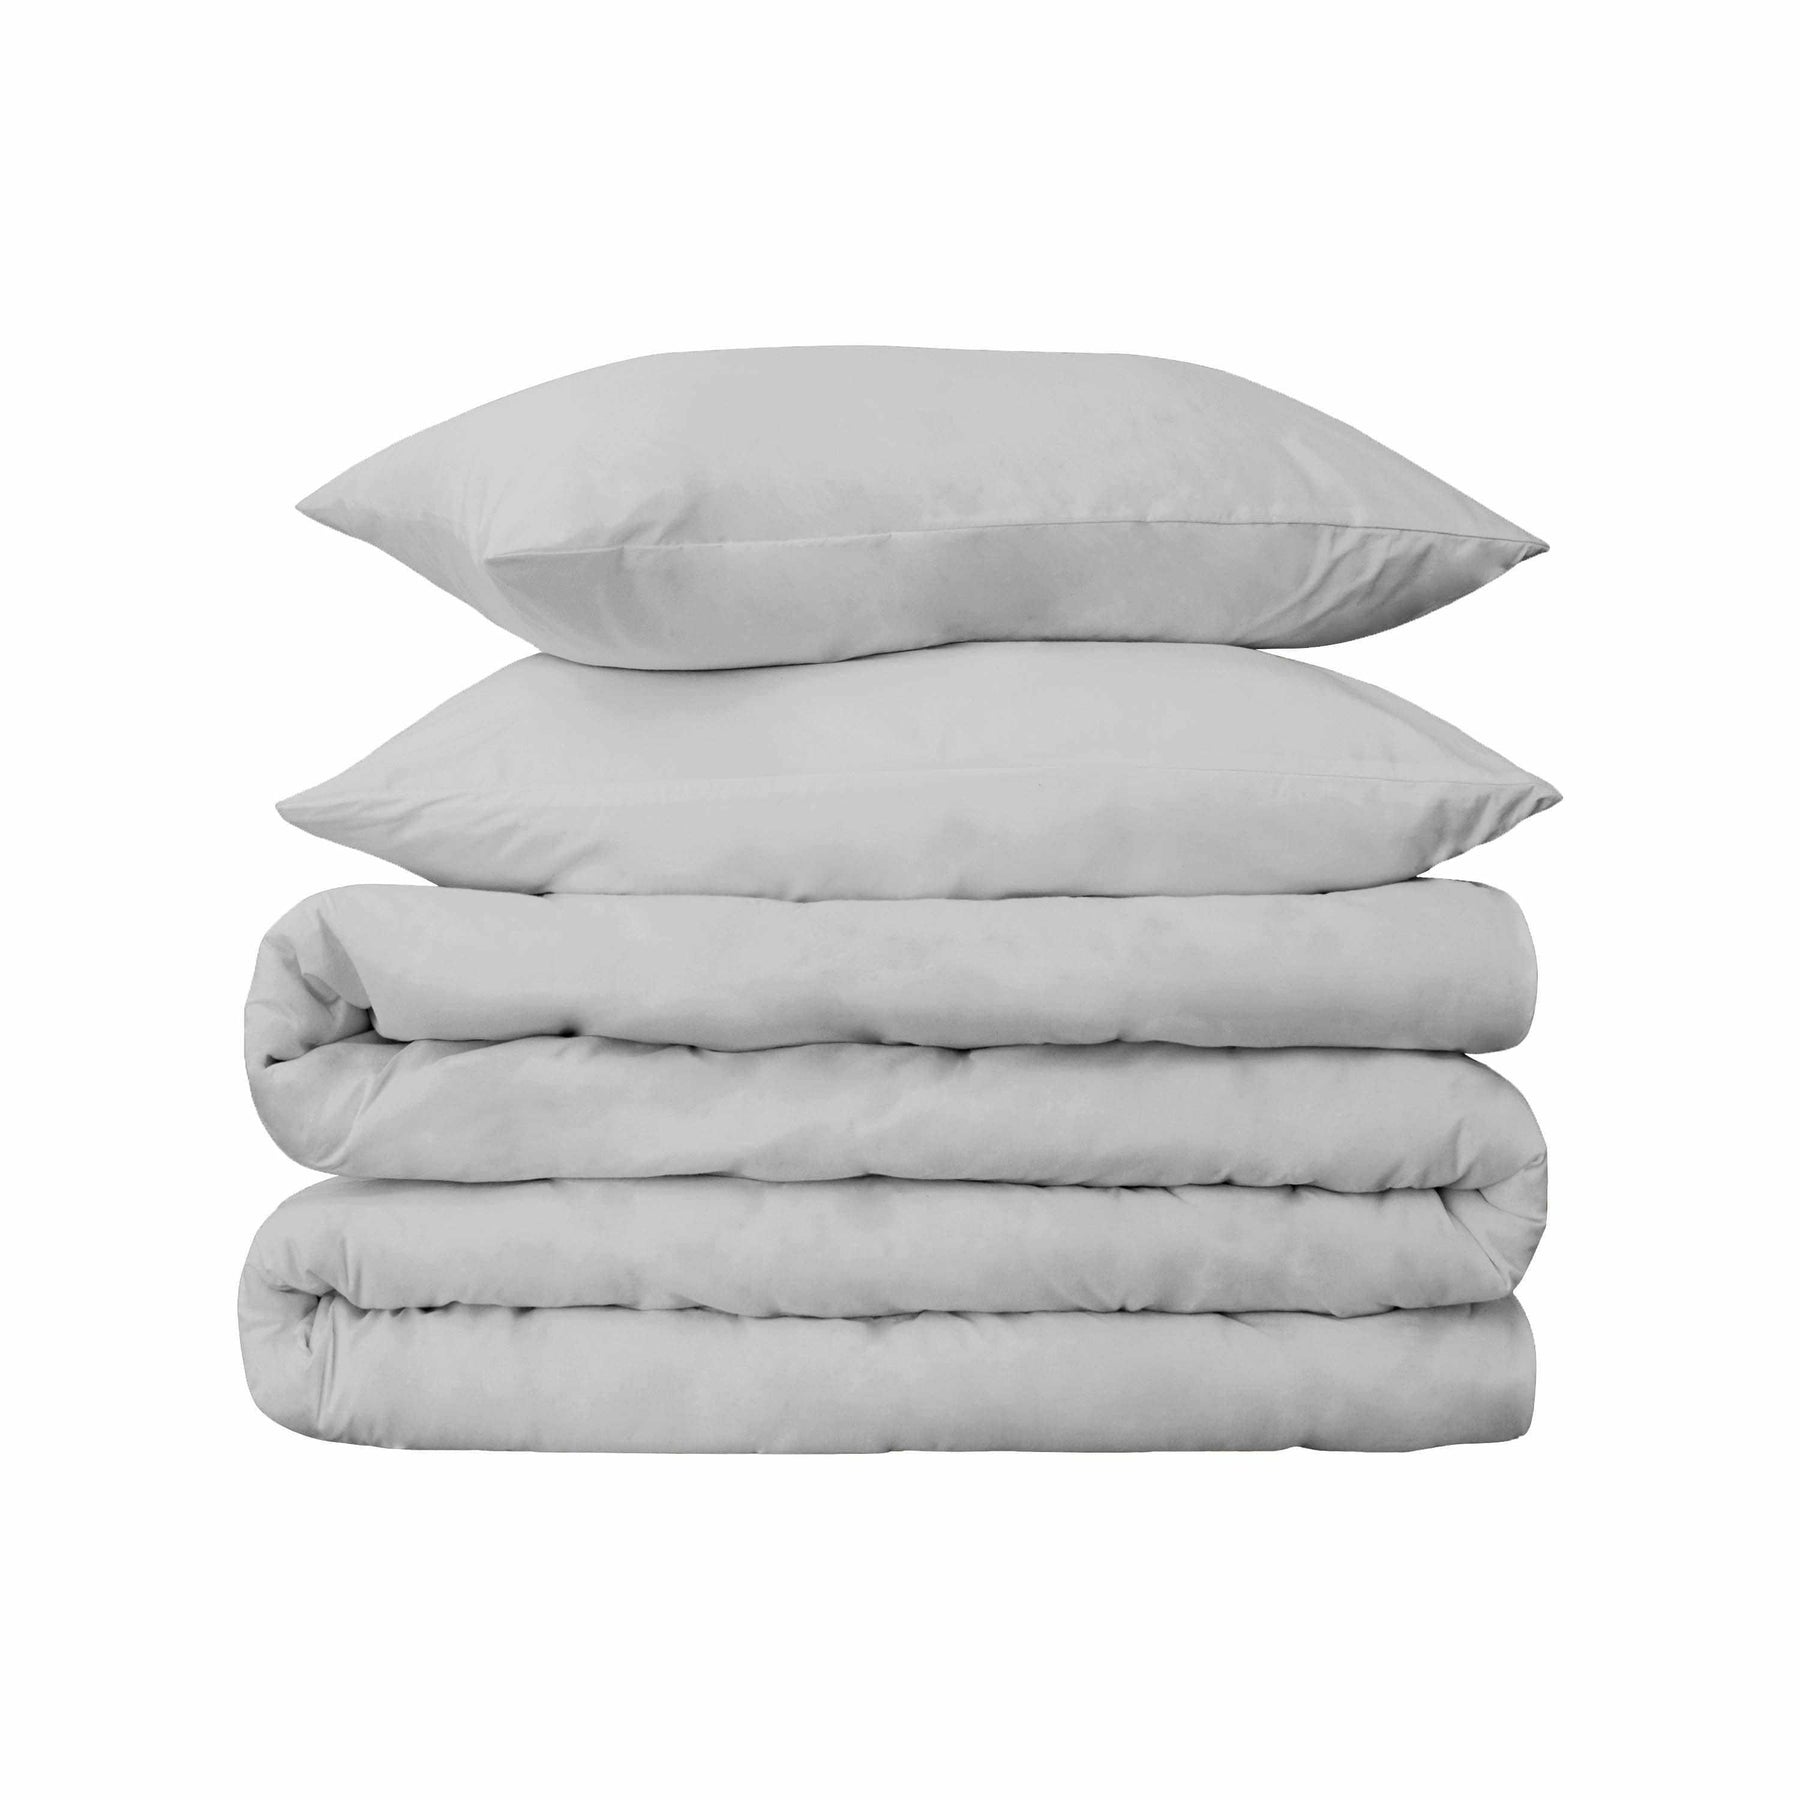  Superior Egyptian Cotton 700 Thread Count Breathable 3-Piece Duvet Cover Bedding Set - Chrome